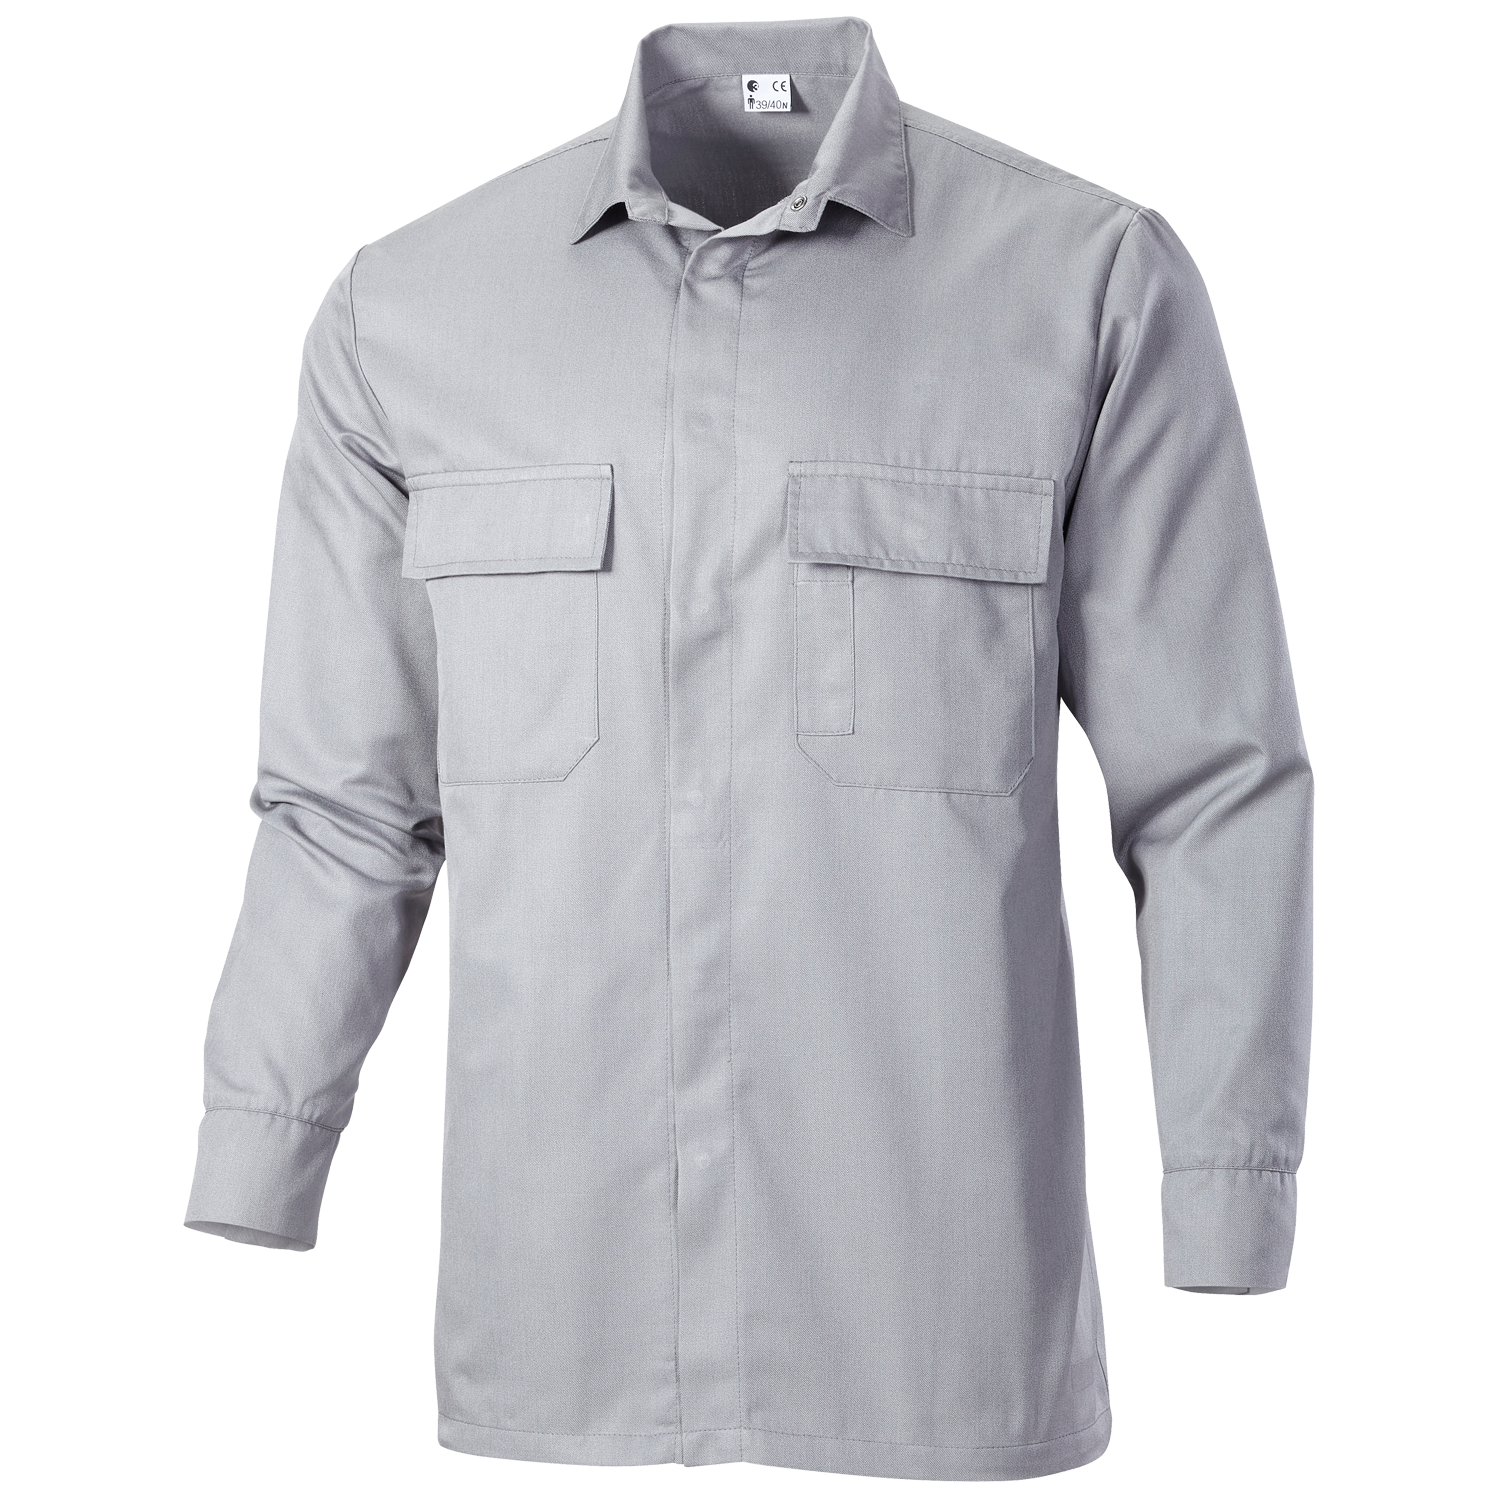 CWS Nomex Comfort Work Shirt Grey Long Sleeves